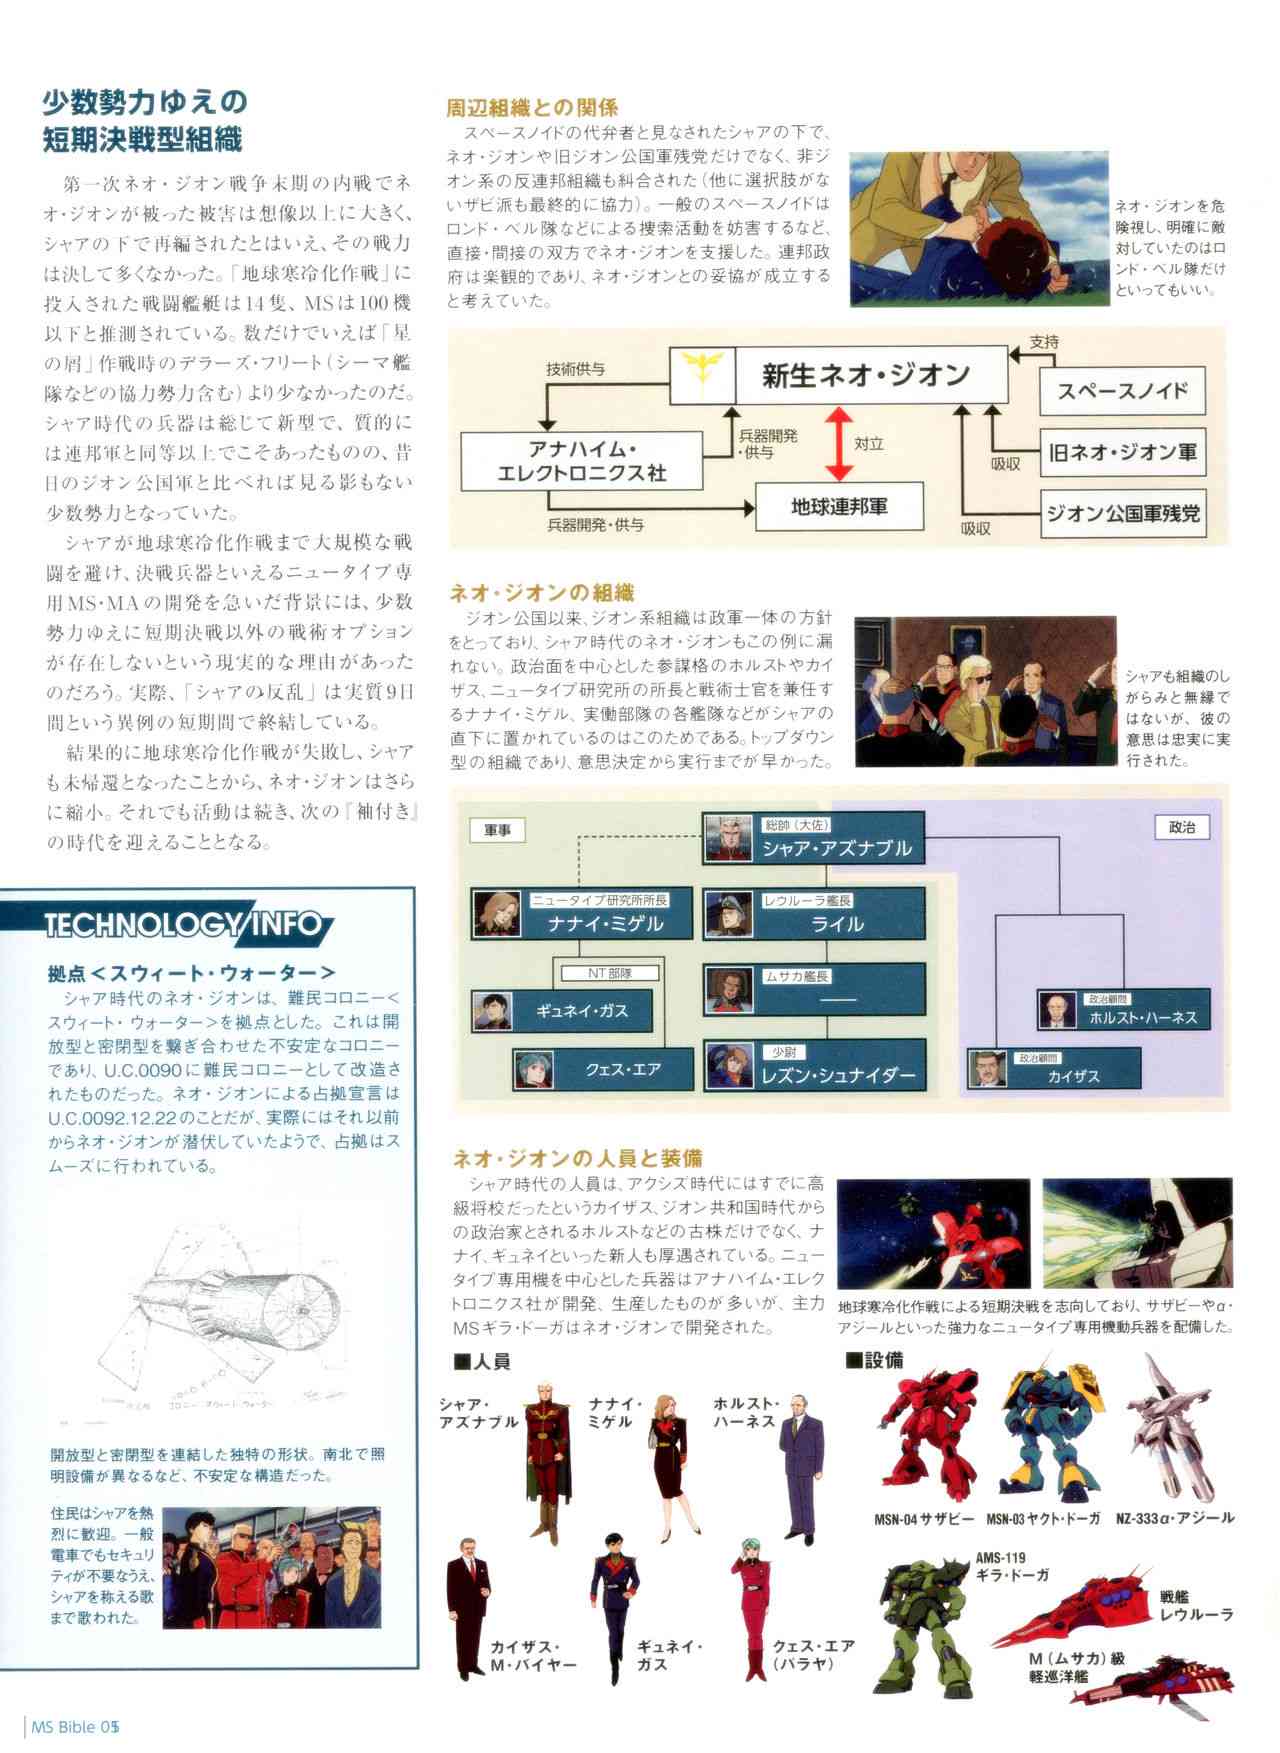 Gundam Mobile Suit Bible - 5卷 - 6